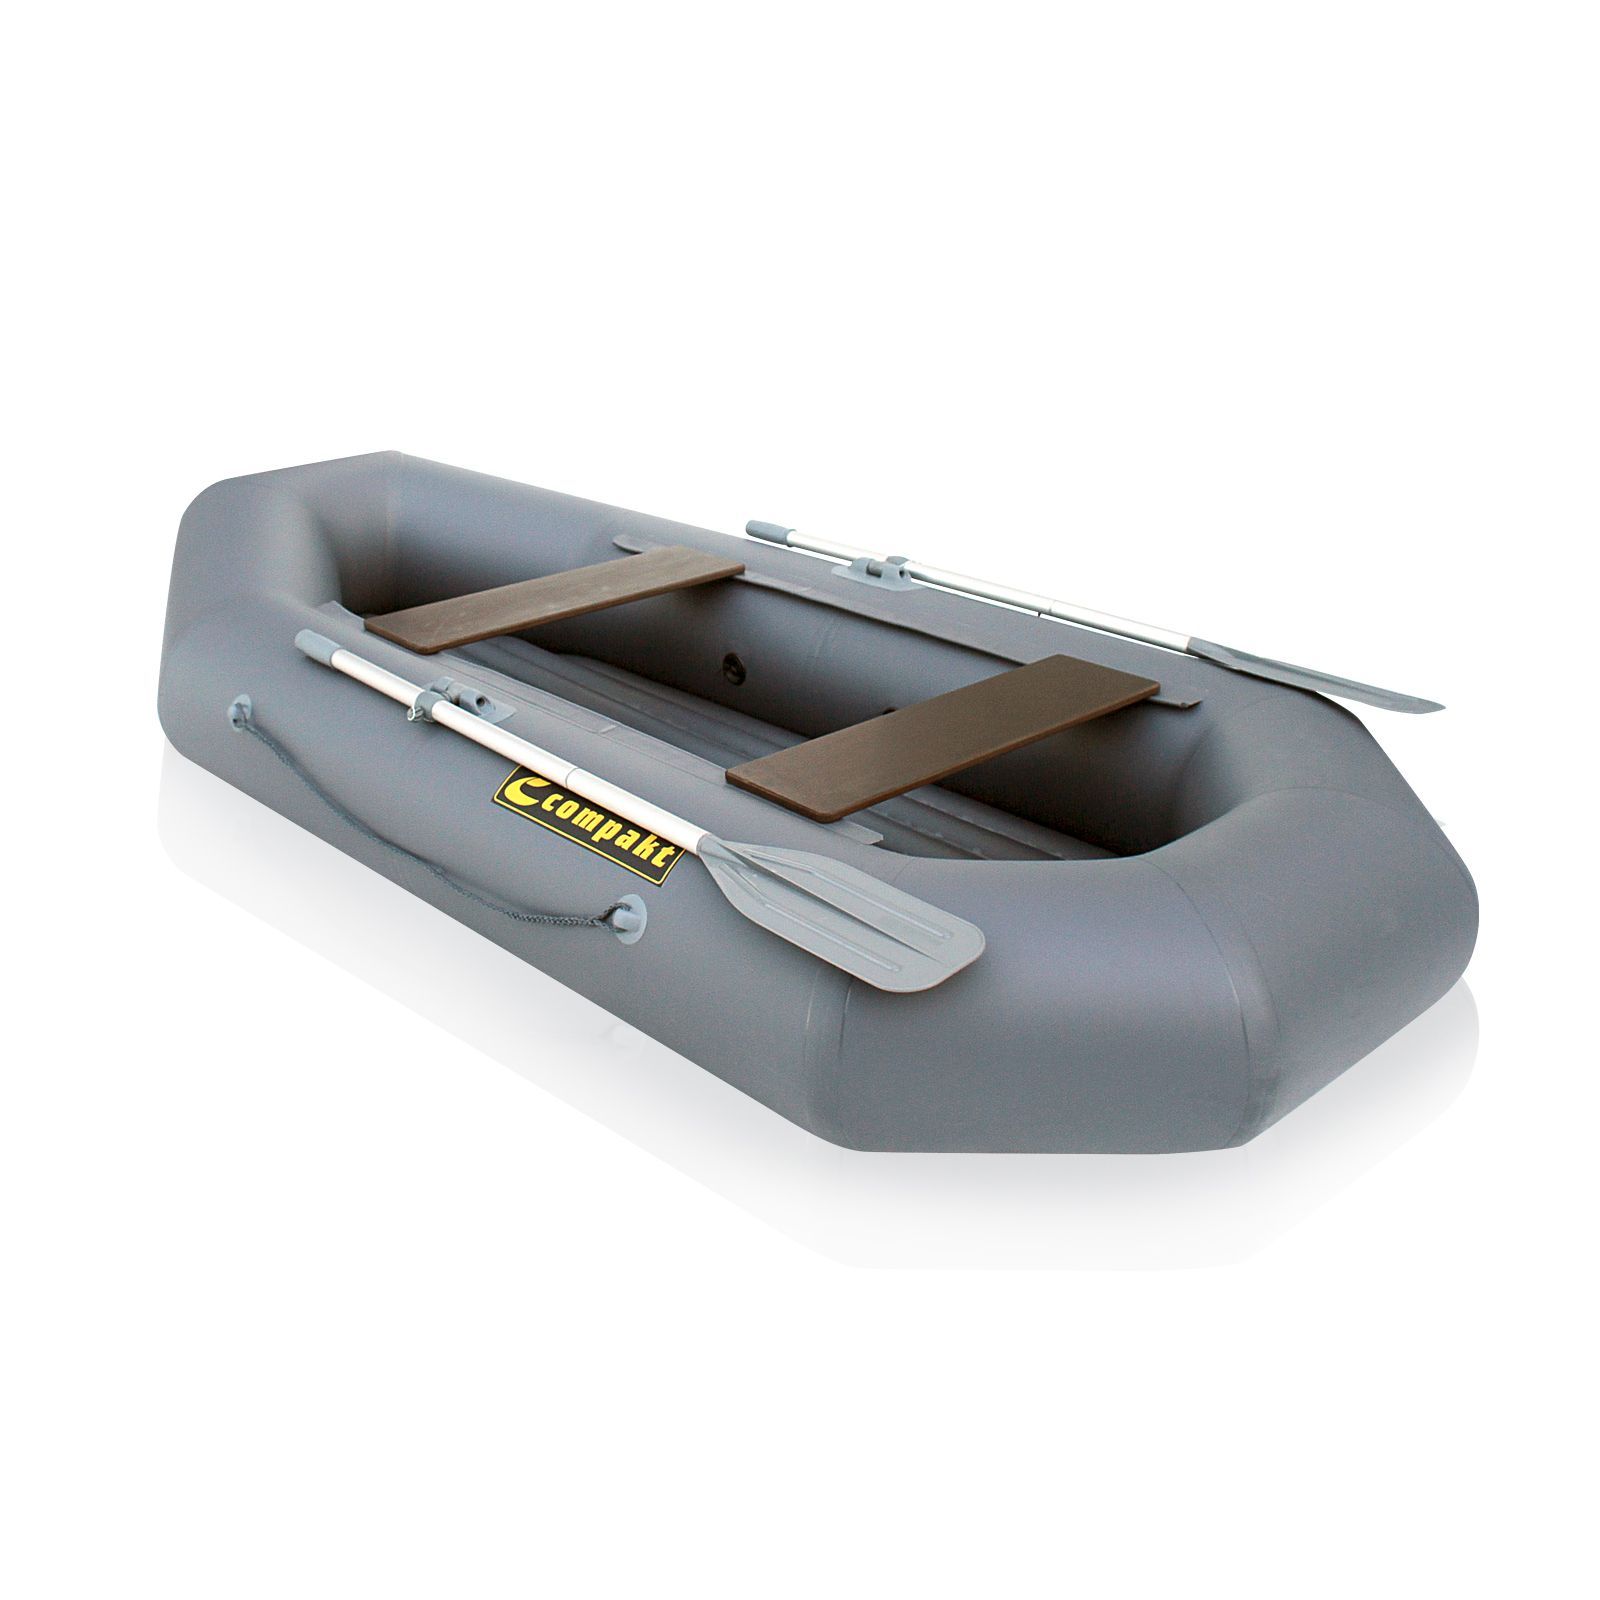 Лодка ПВХ Компакт-280N- НД надувное дно серый цвет упаковка-мешок оксфорд